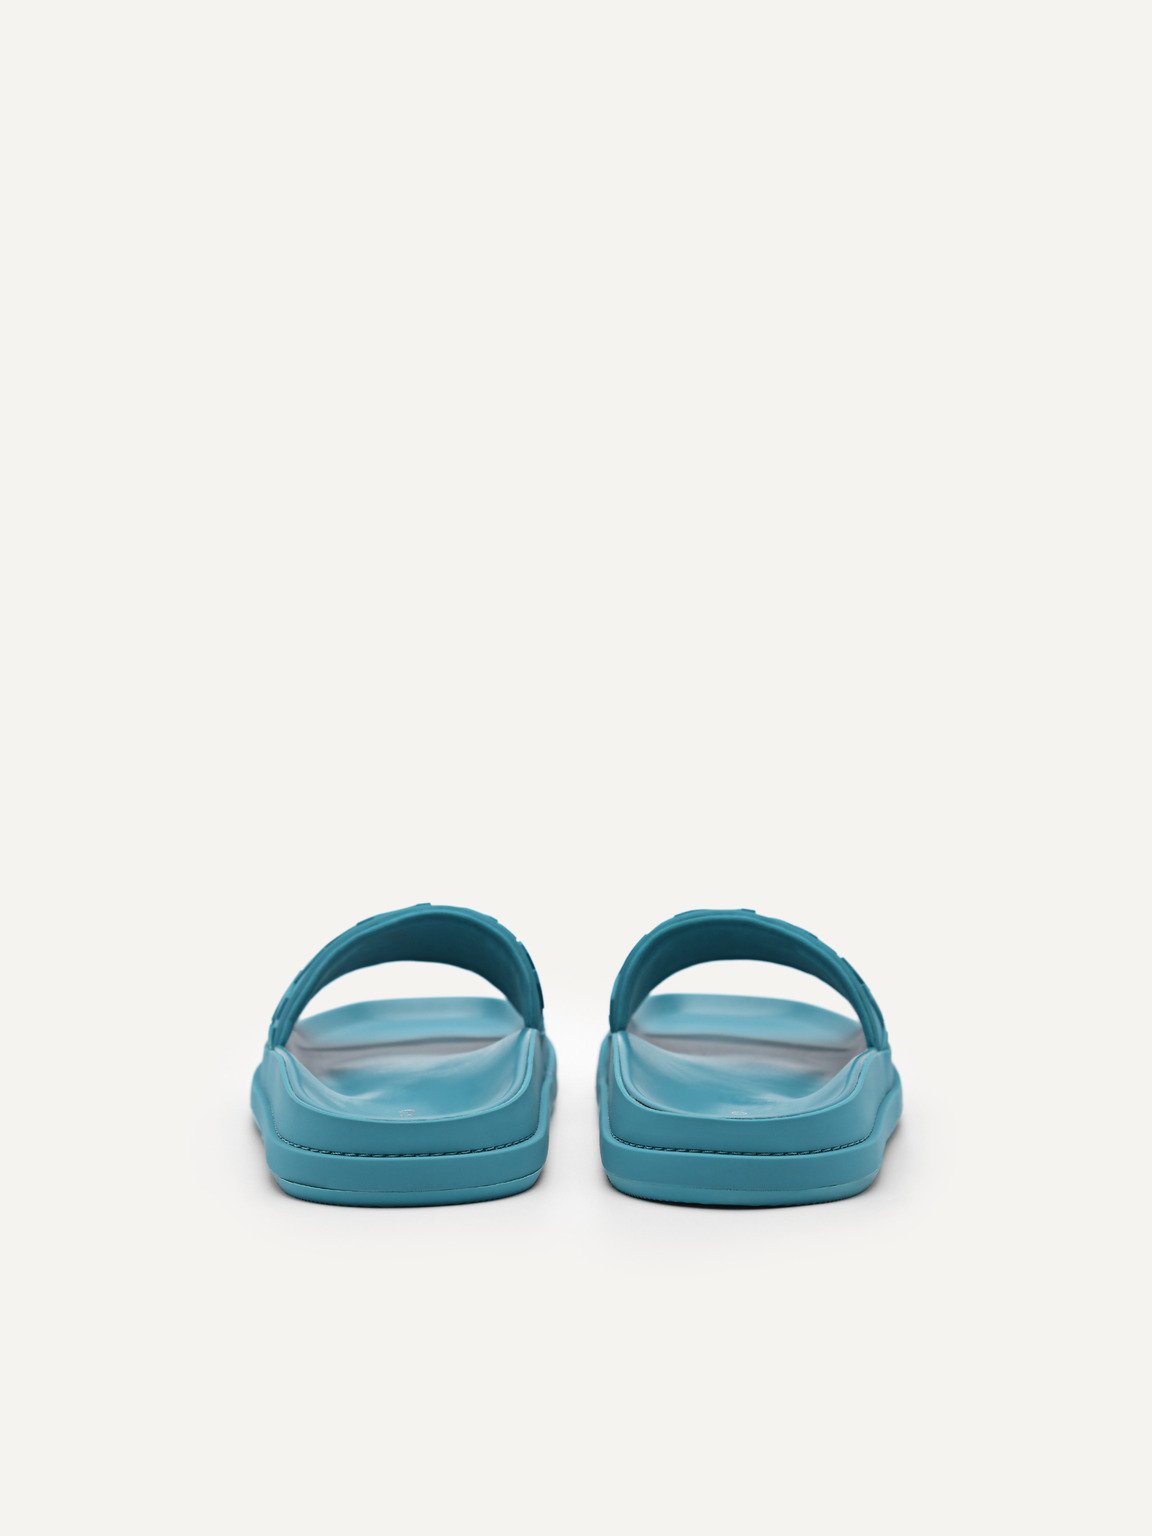 PEDRO標誌壓紋拖鞋, 藍綠色